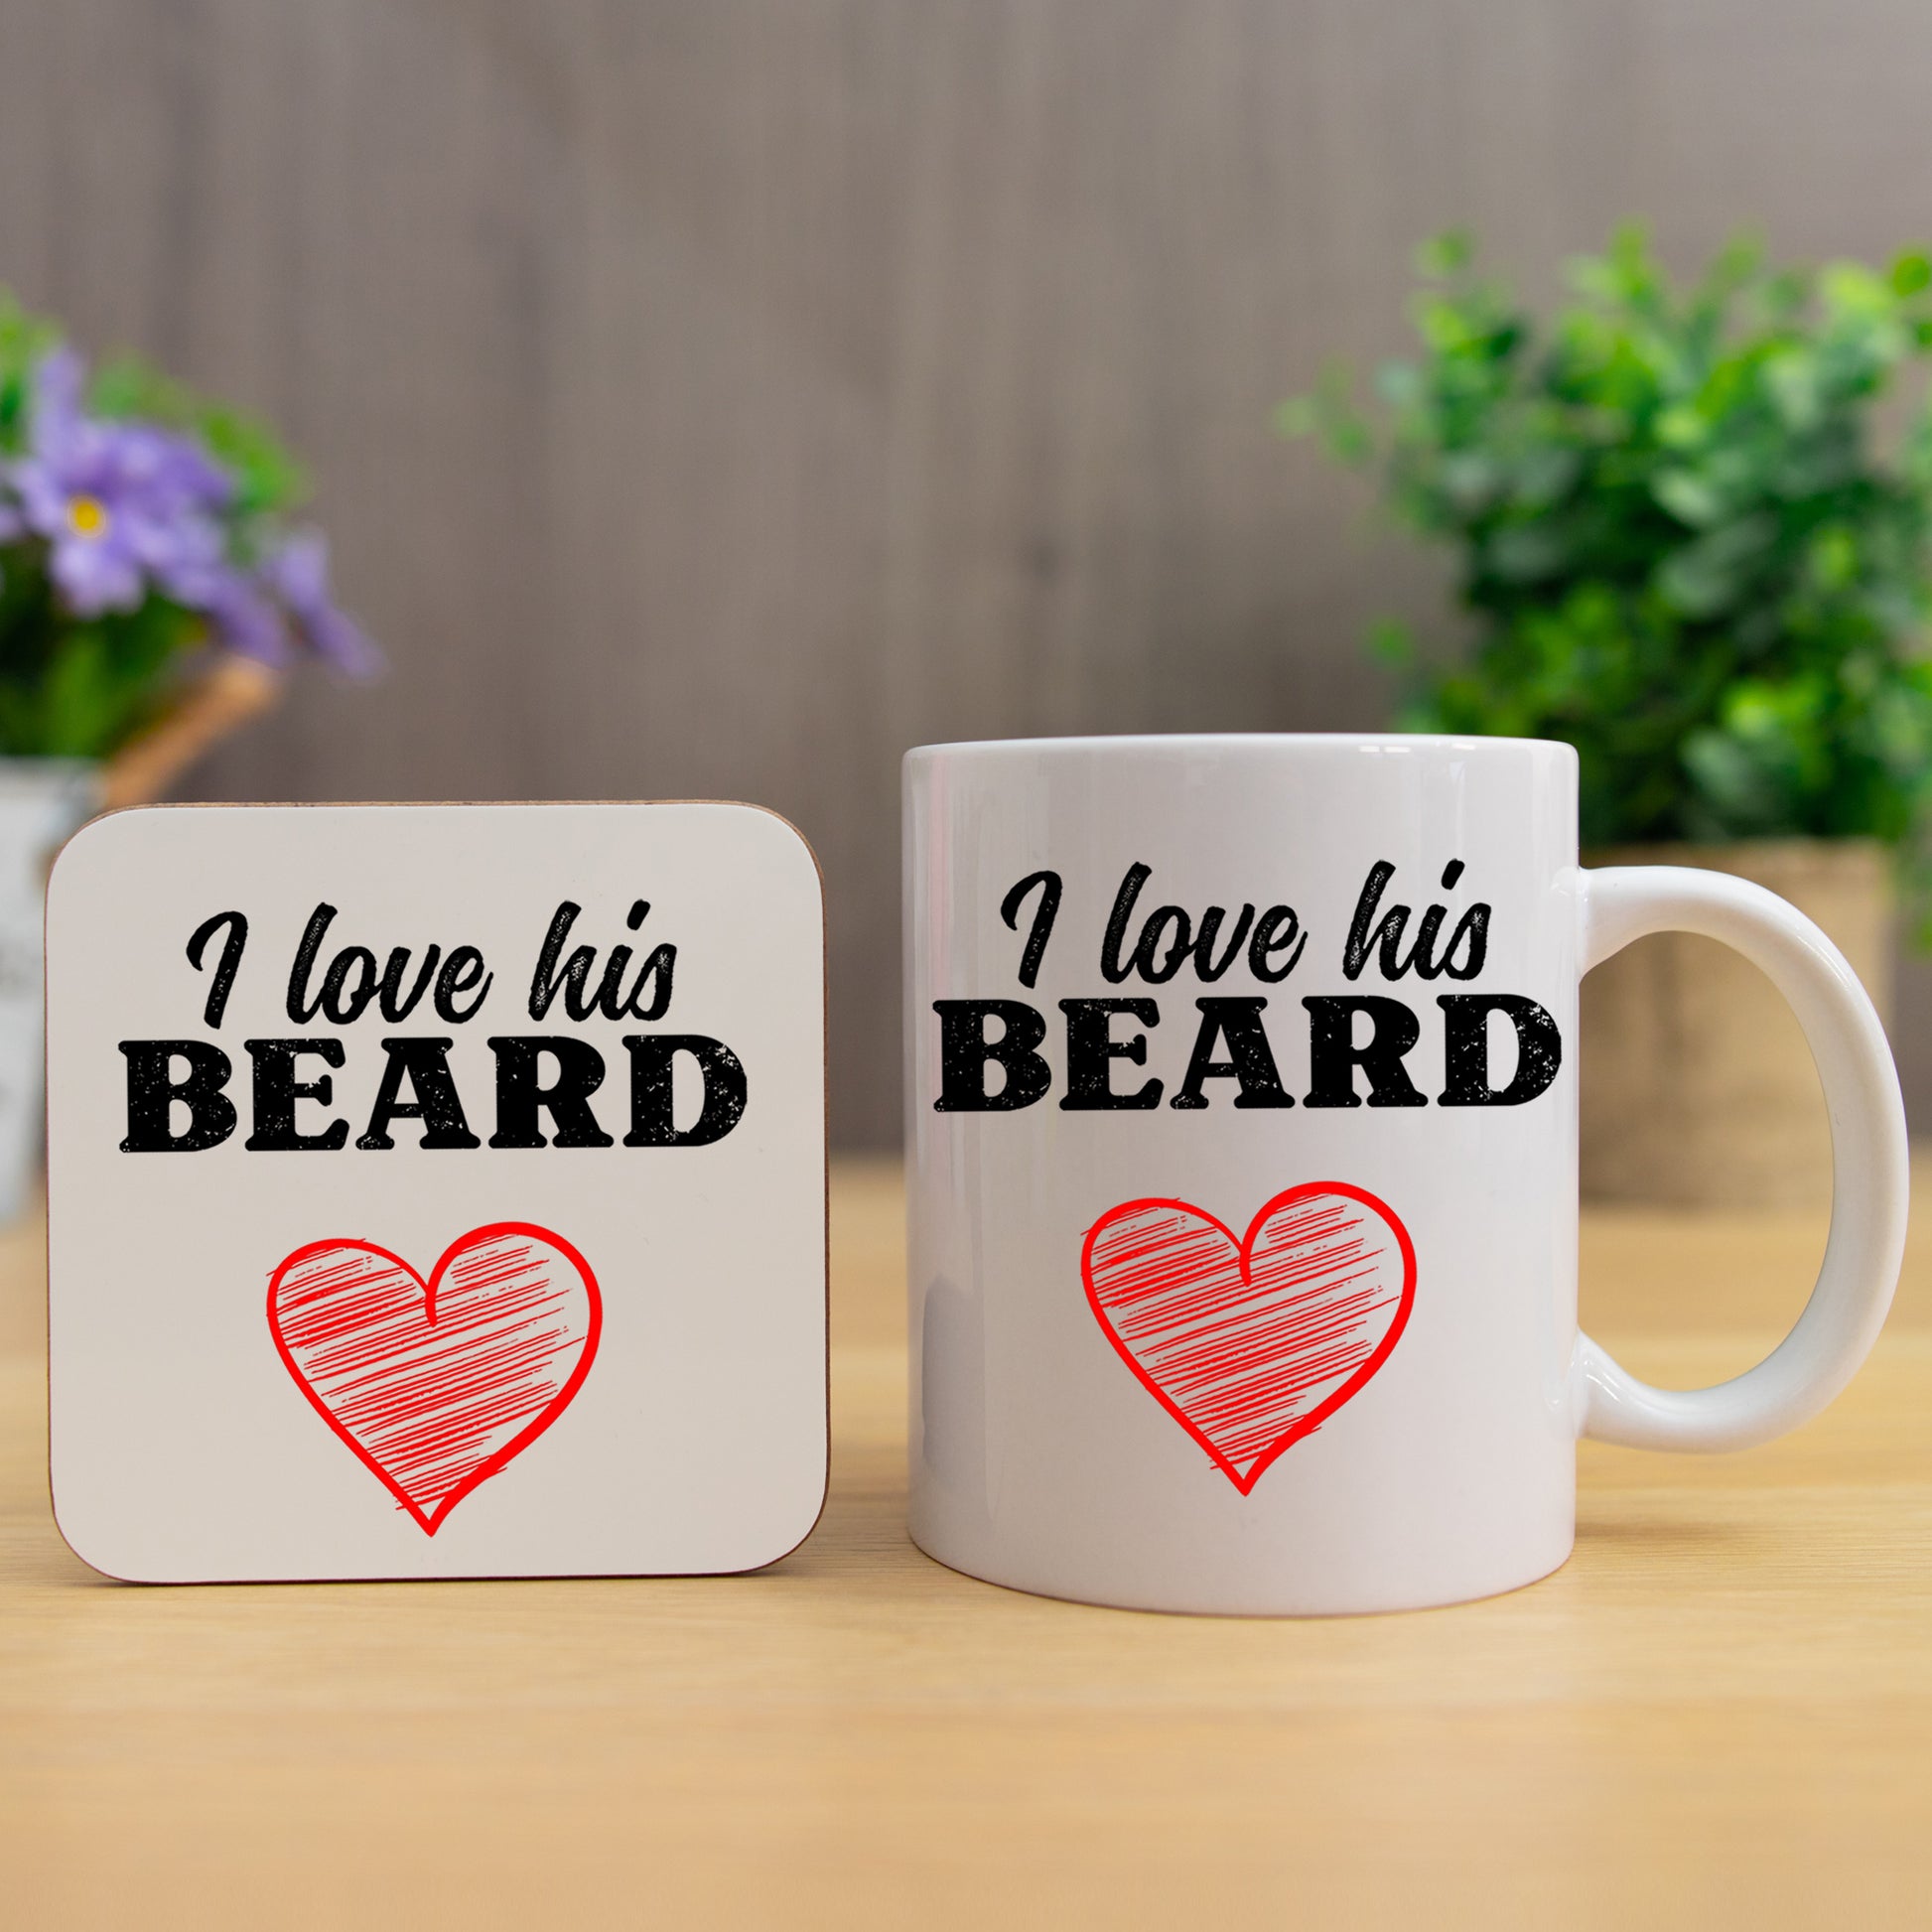 I Love His Beard / Her Butt Mug and/or Coaster Gift  - Always Looking Good - I Love His Beard Mug & Coaster Set  